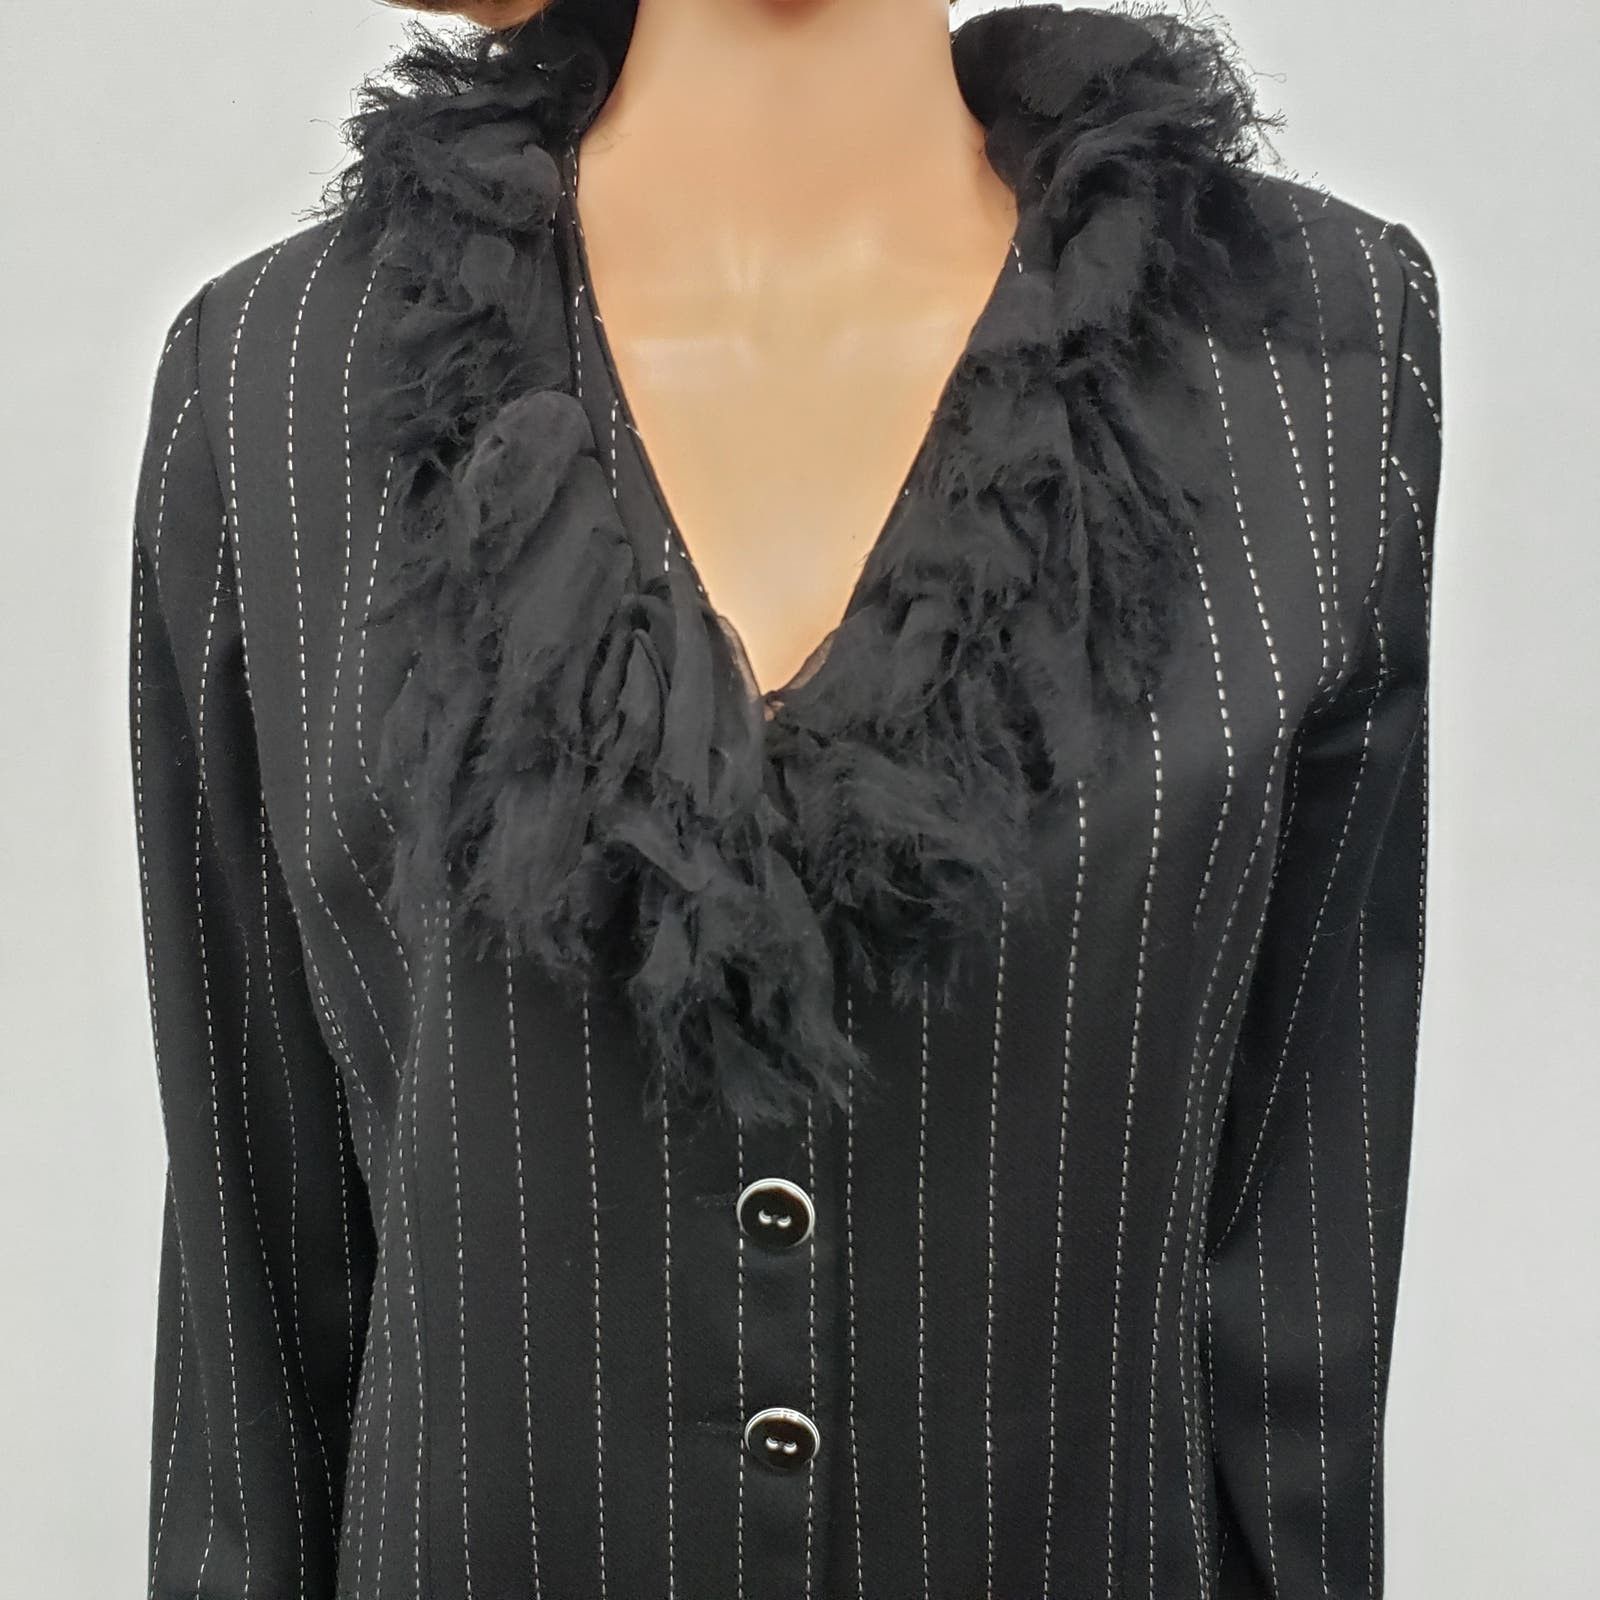 Vintage Pamela Vanderlinde Zone Blazer Jacket Pinstriped Ruffled 8 Size M / US 6-8 / IT 42-44 - 2 Preview